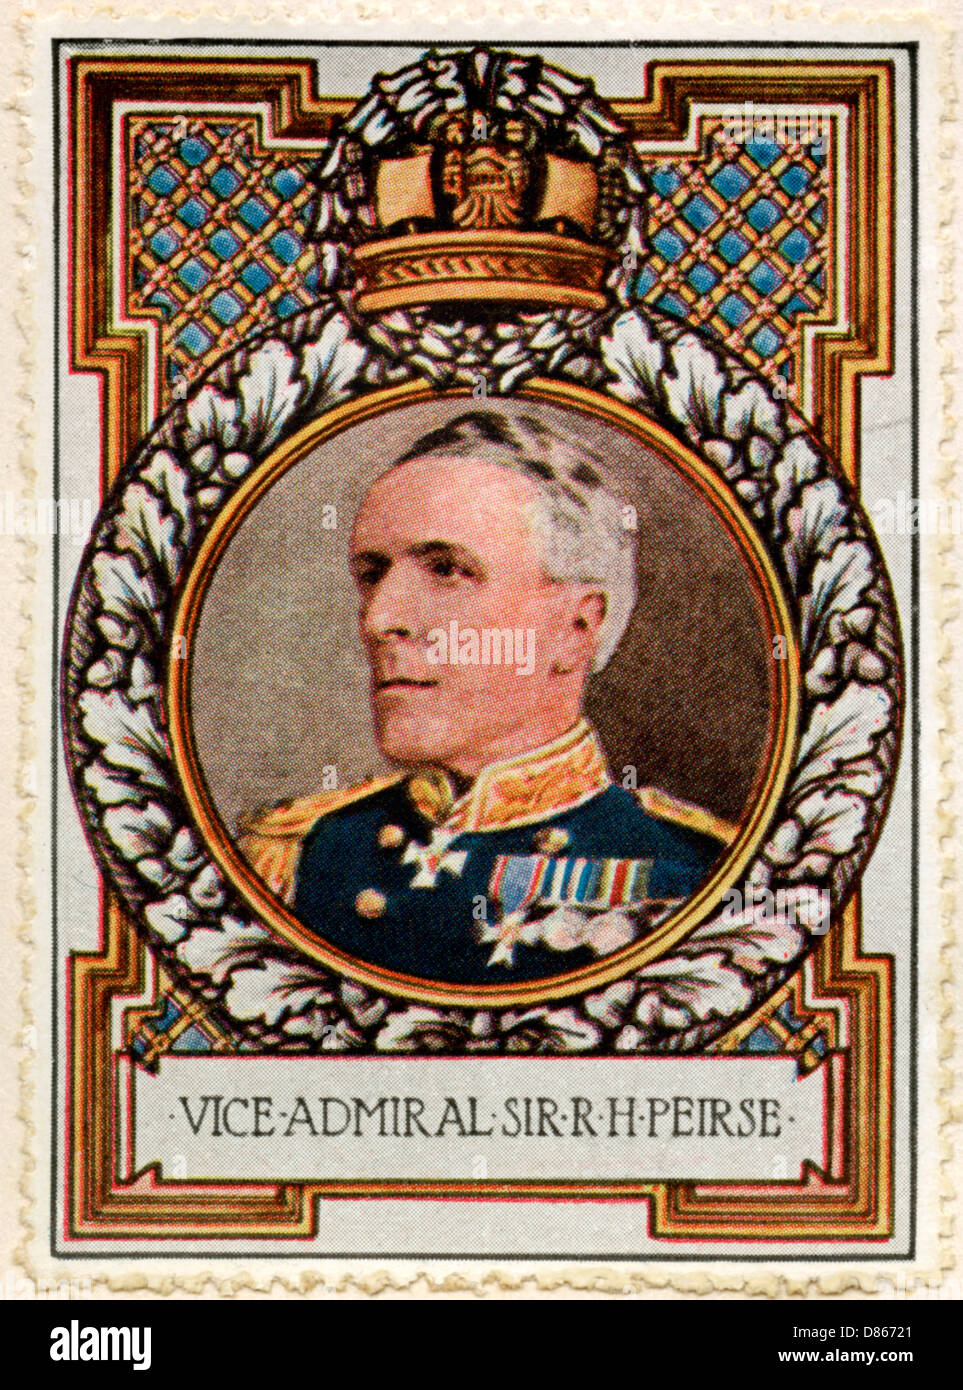 Admiral Sir Richard Peirse / Stamp Stockfoto